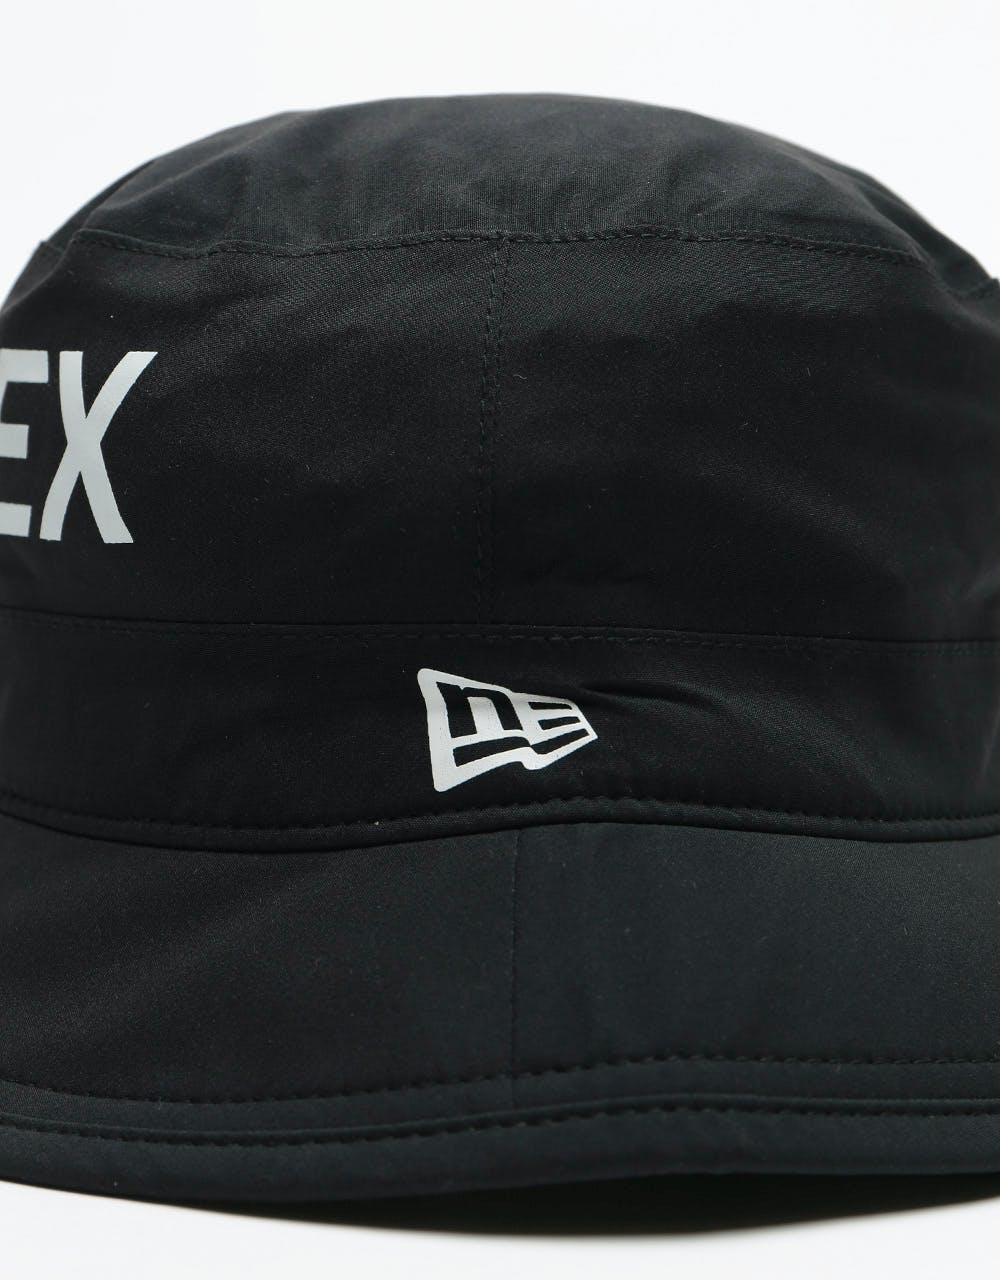 New Era GORE-TEX Bucket Hat - Black